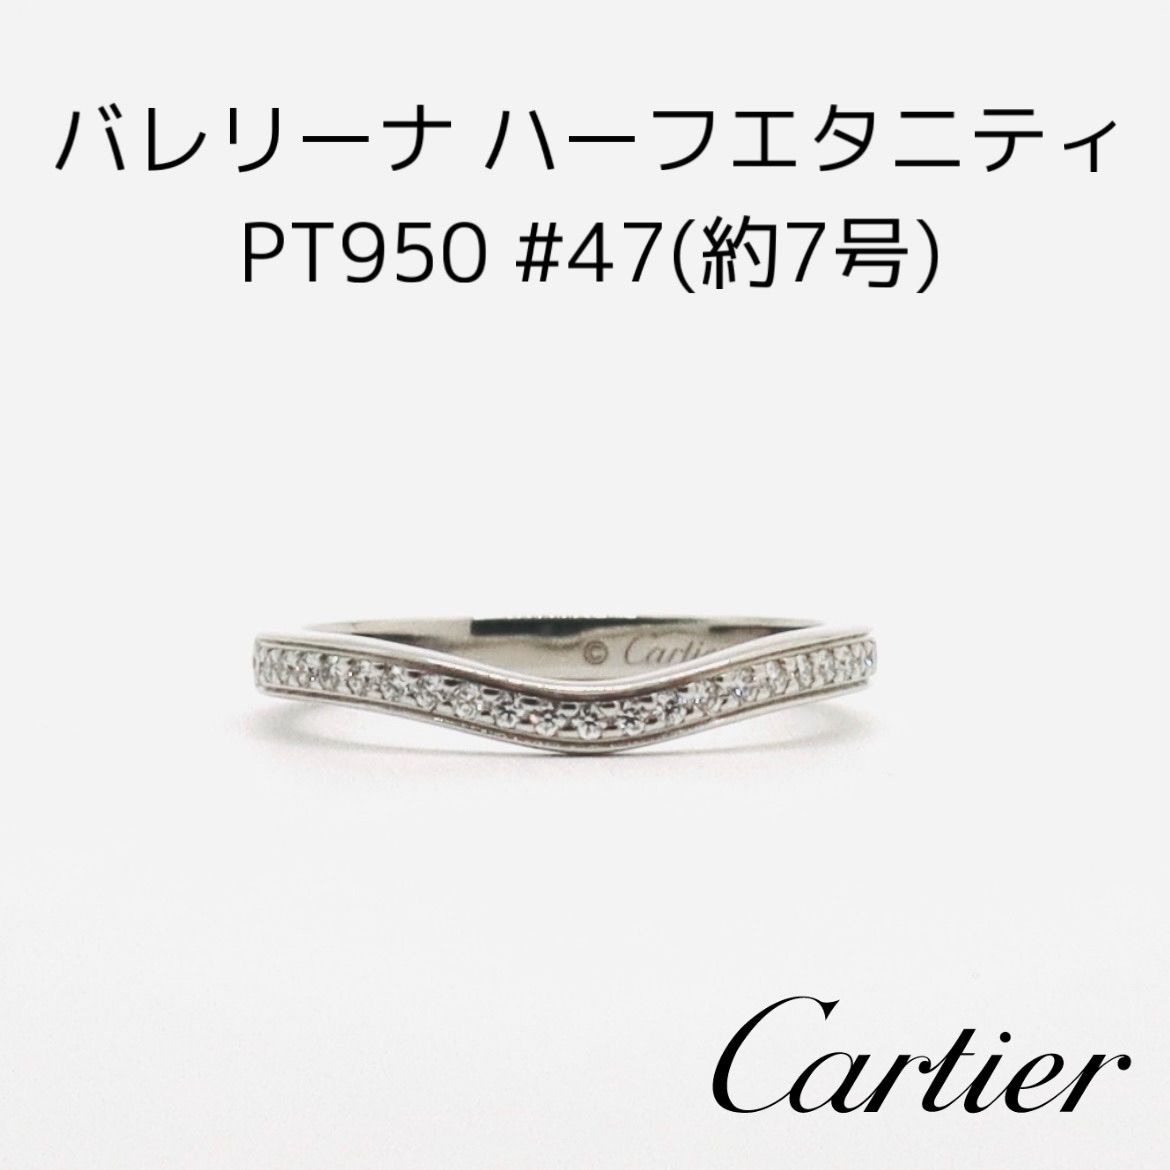 Cartier カルティエ バレリーナ ウェディング リング ハーフエタニティ ダイヤモンド #47 約7号